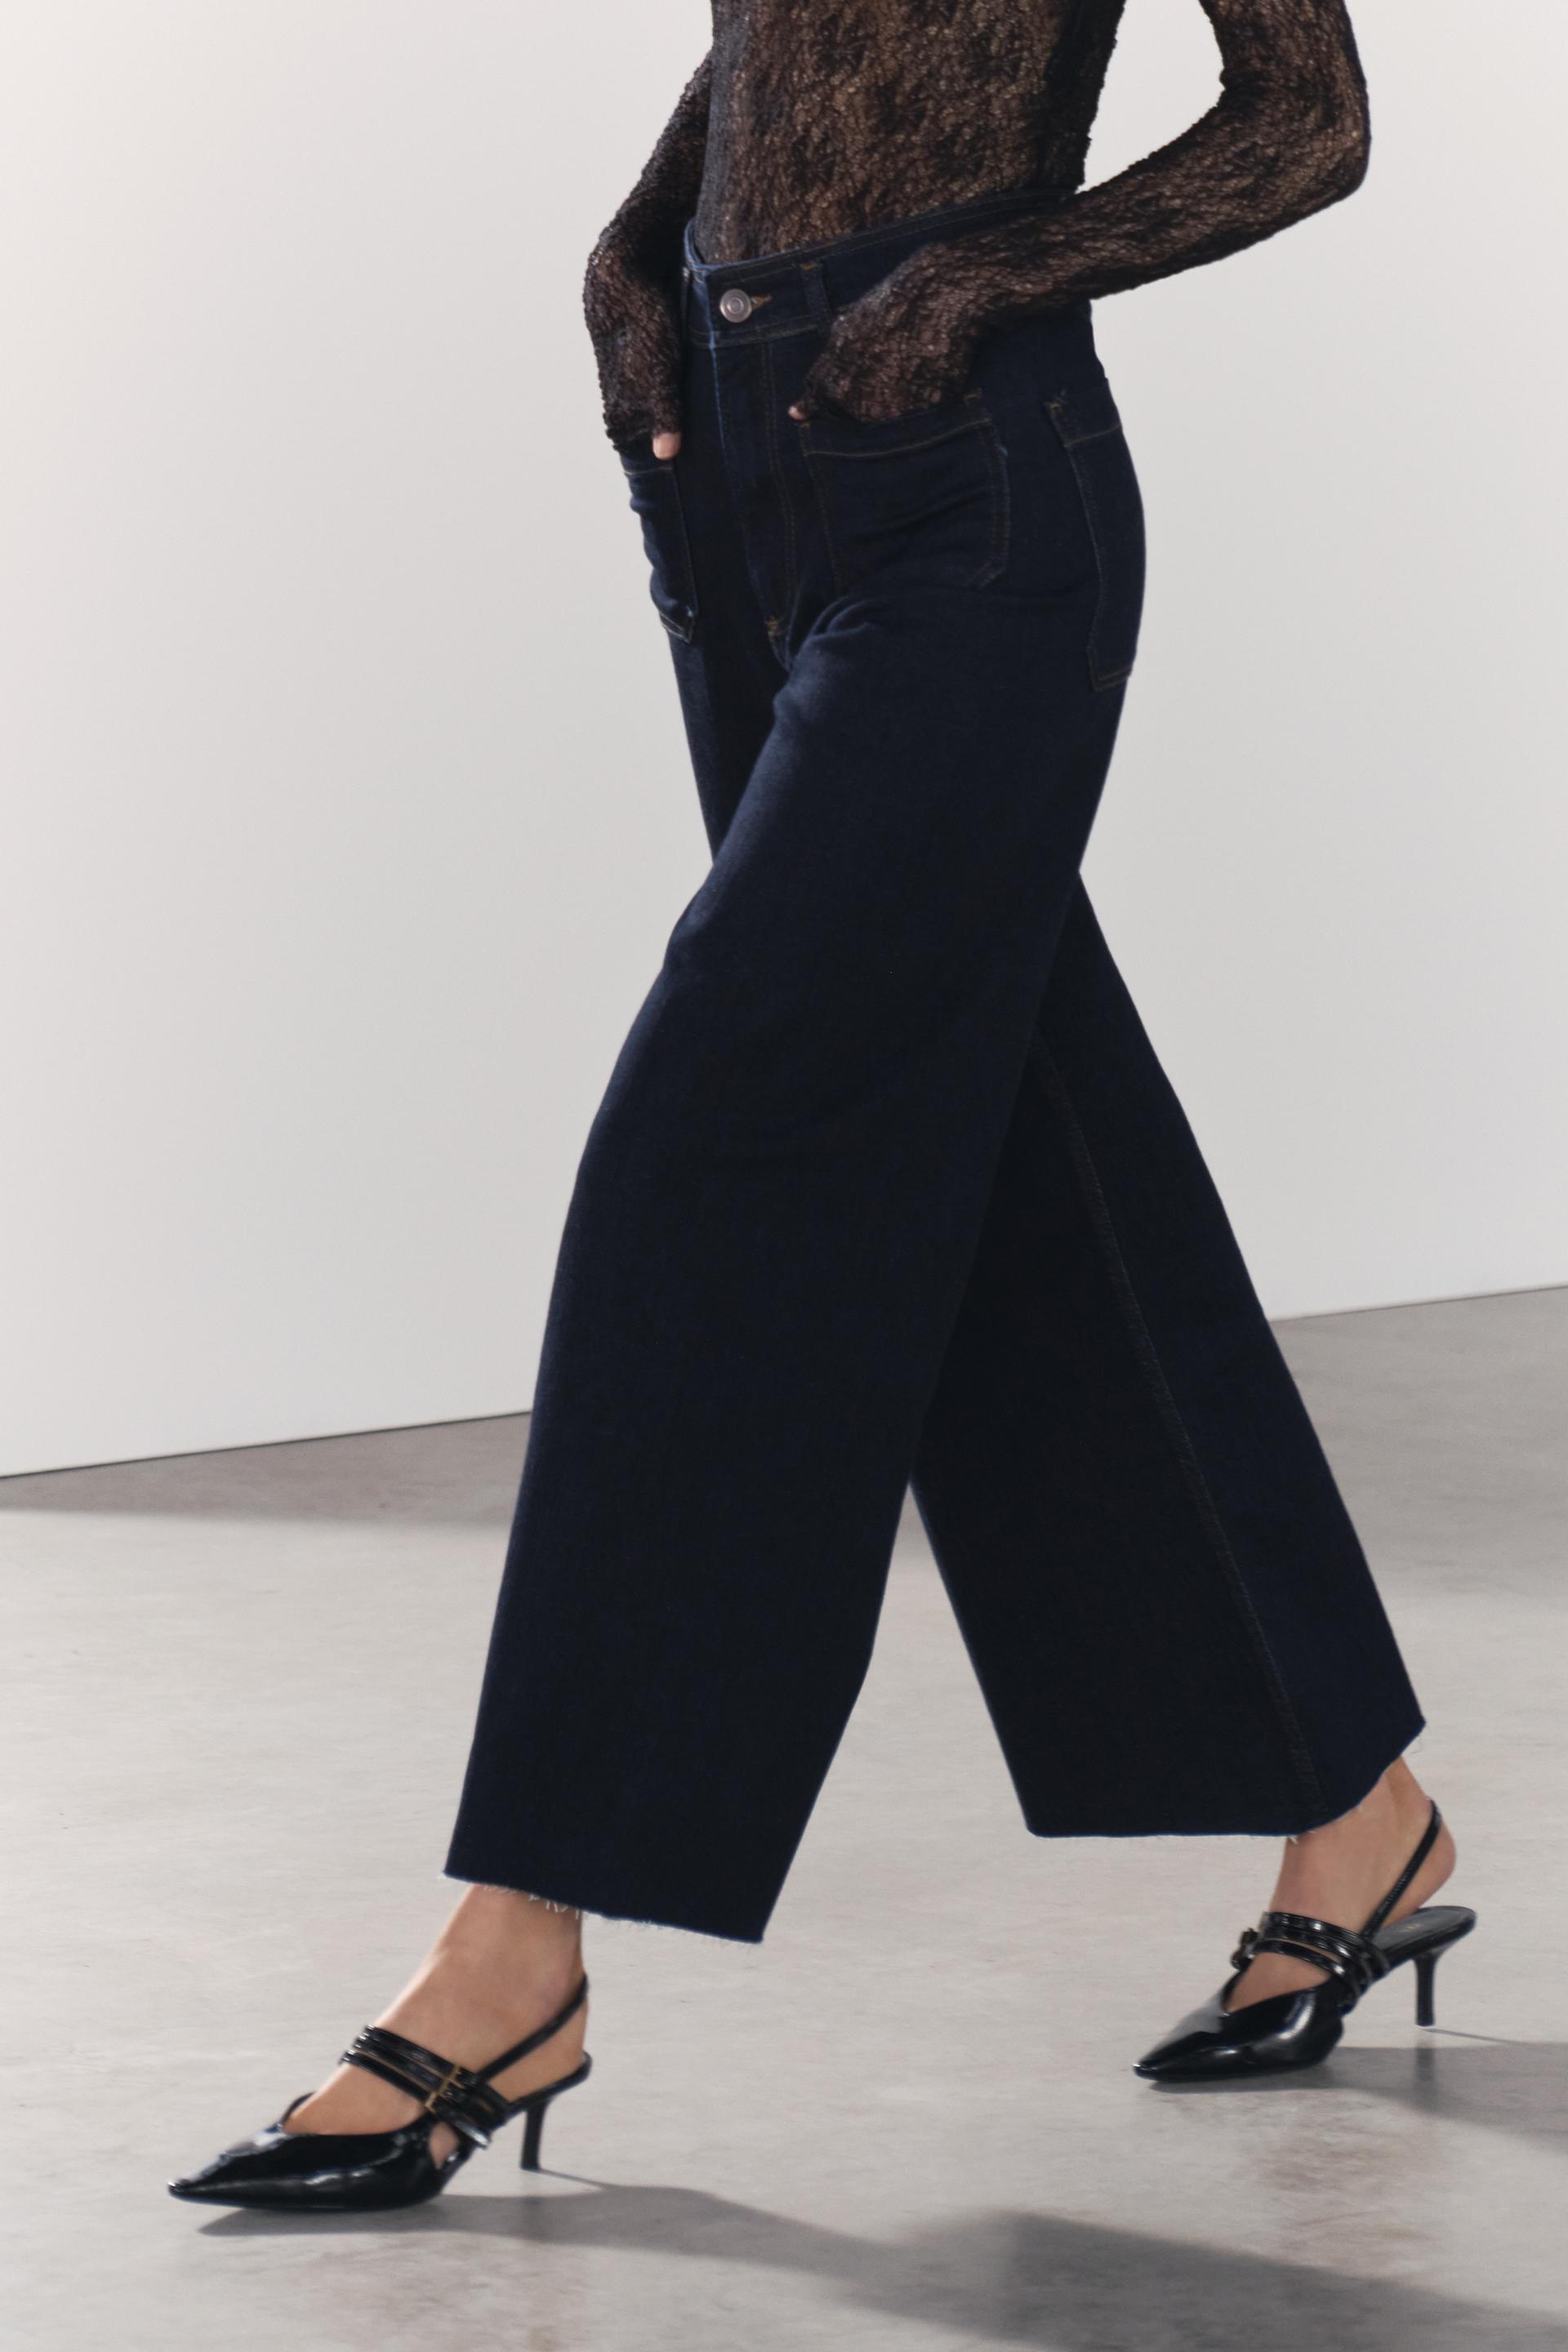 Zara Womens Skinny Leg Jeans Blue Black Pants Size 4 Extra Small Lot 2 -  Shop Linda's Stuff